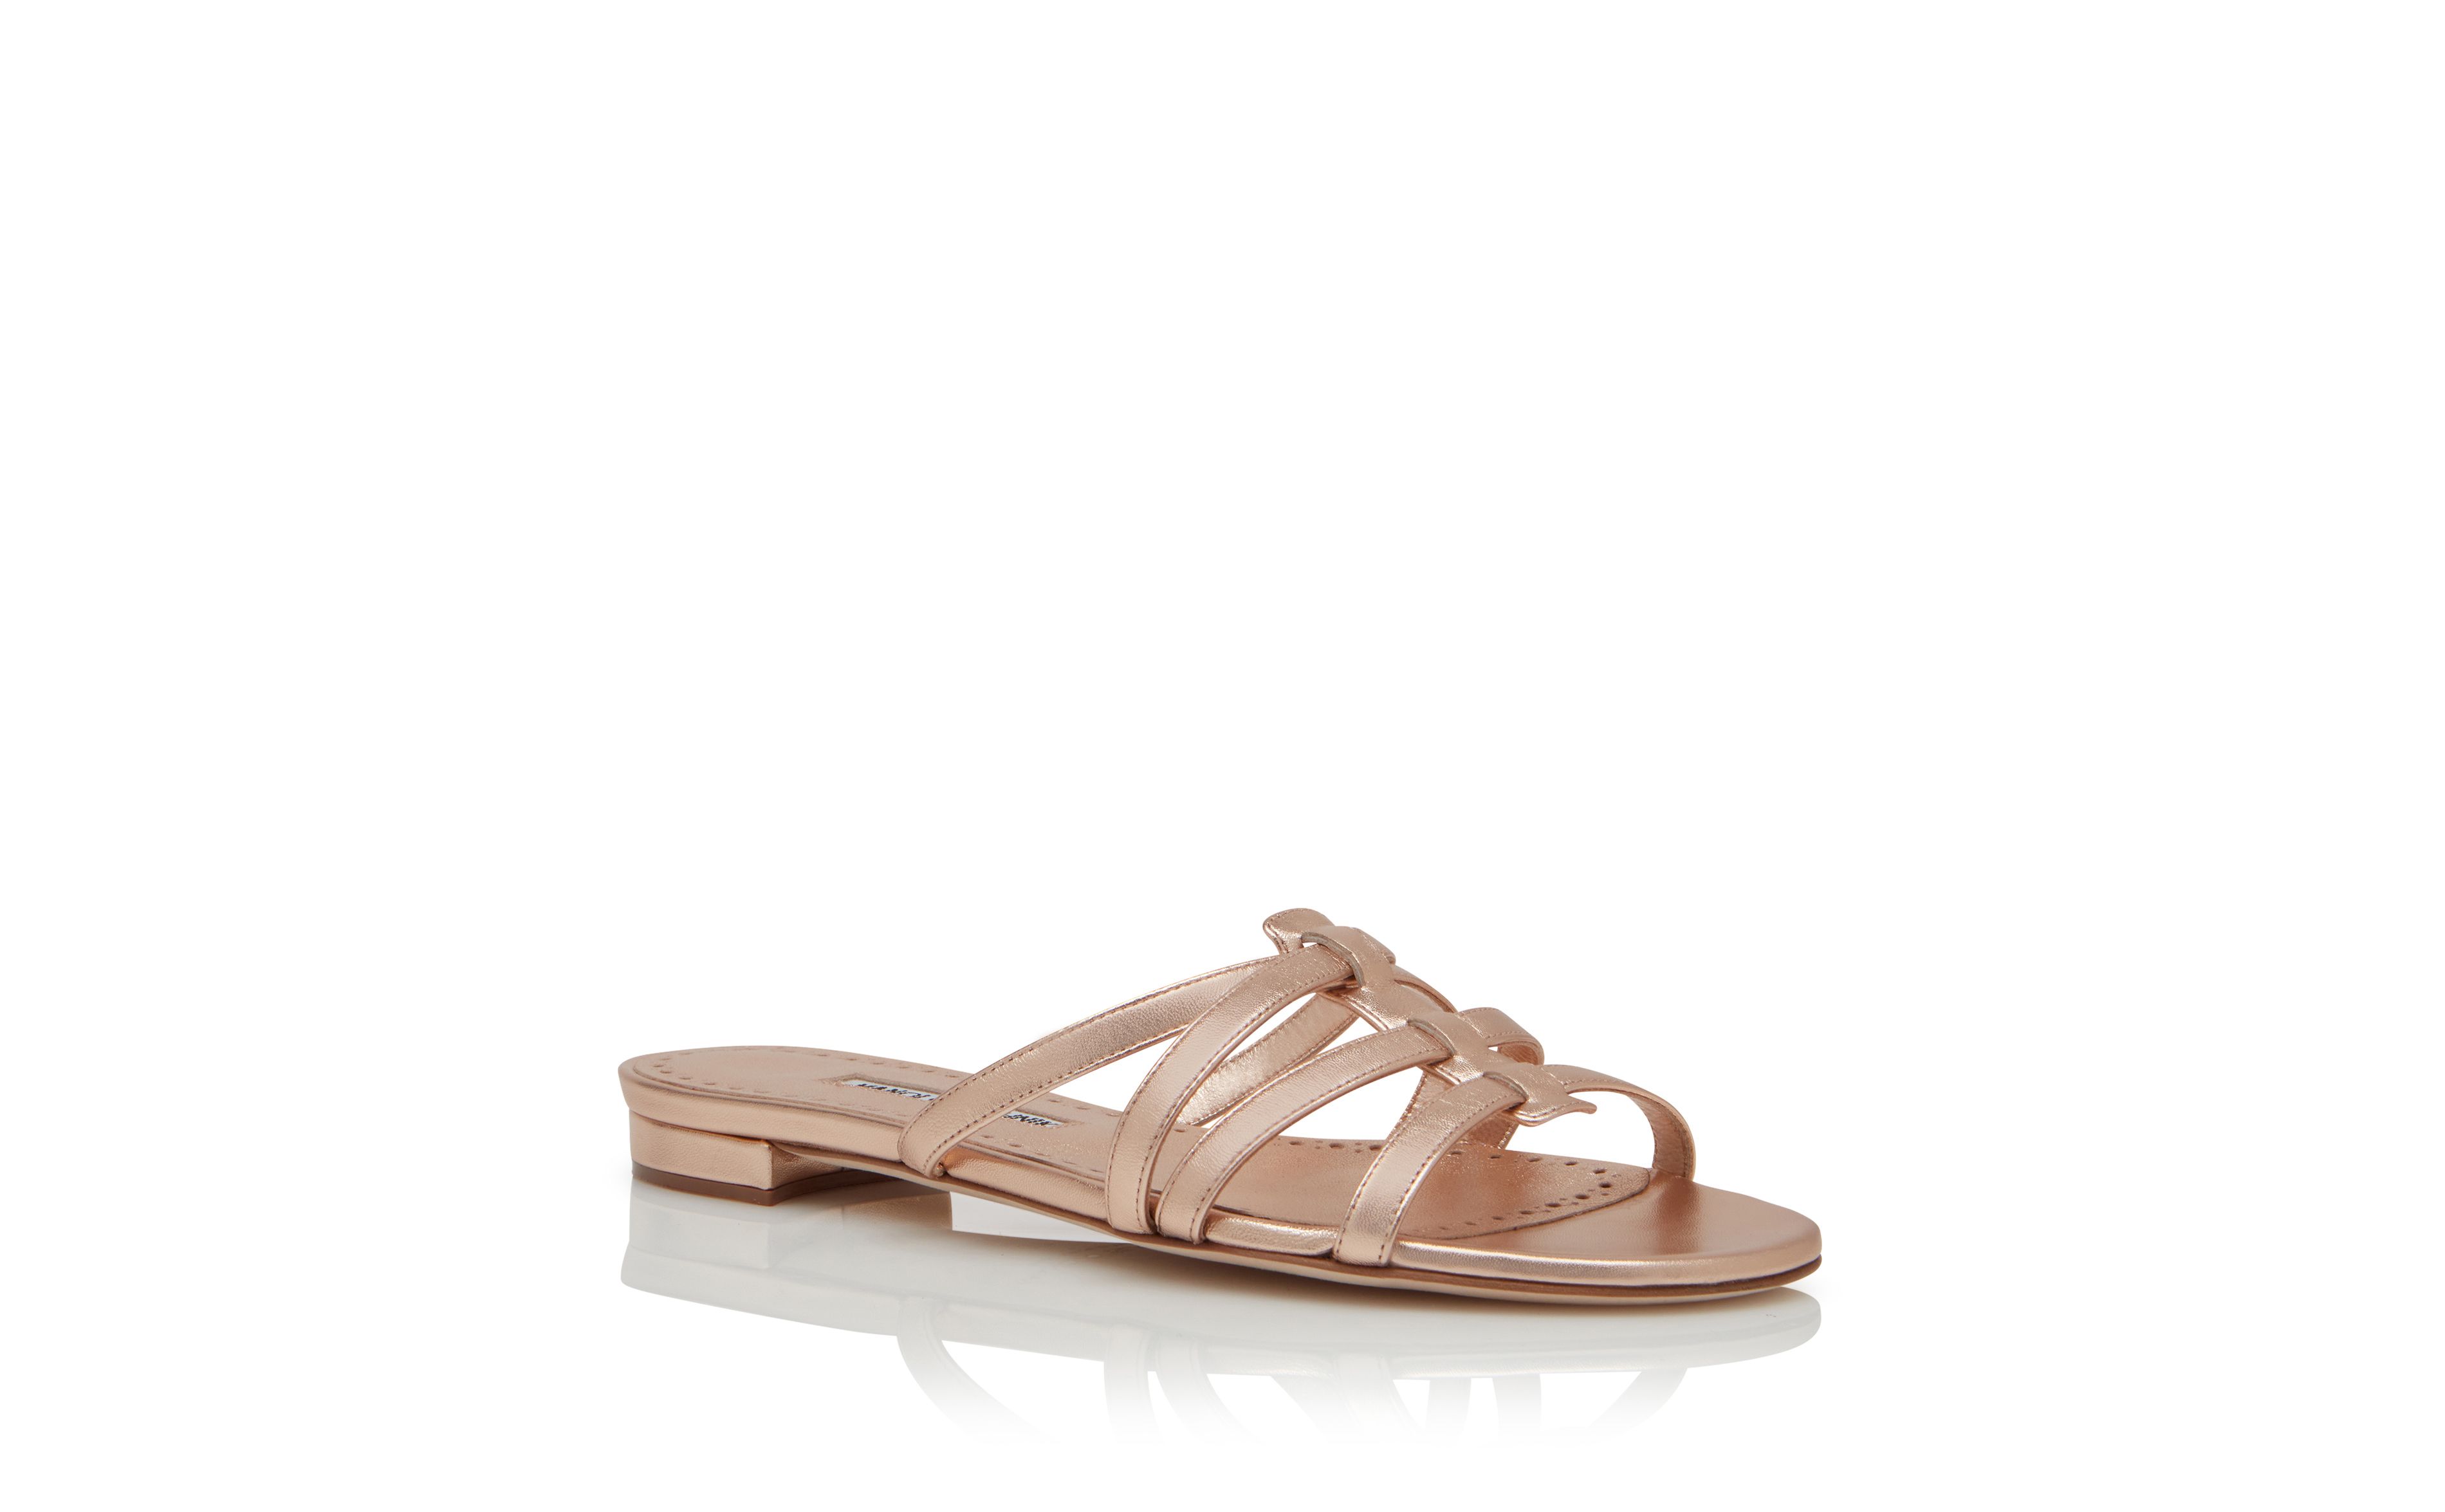 Designer Copper Nappa Leather Sandals - Image Upsell